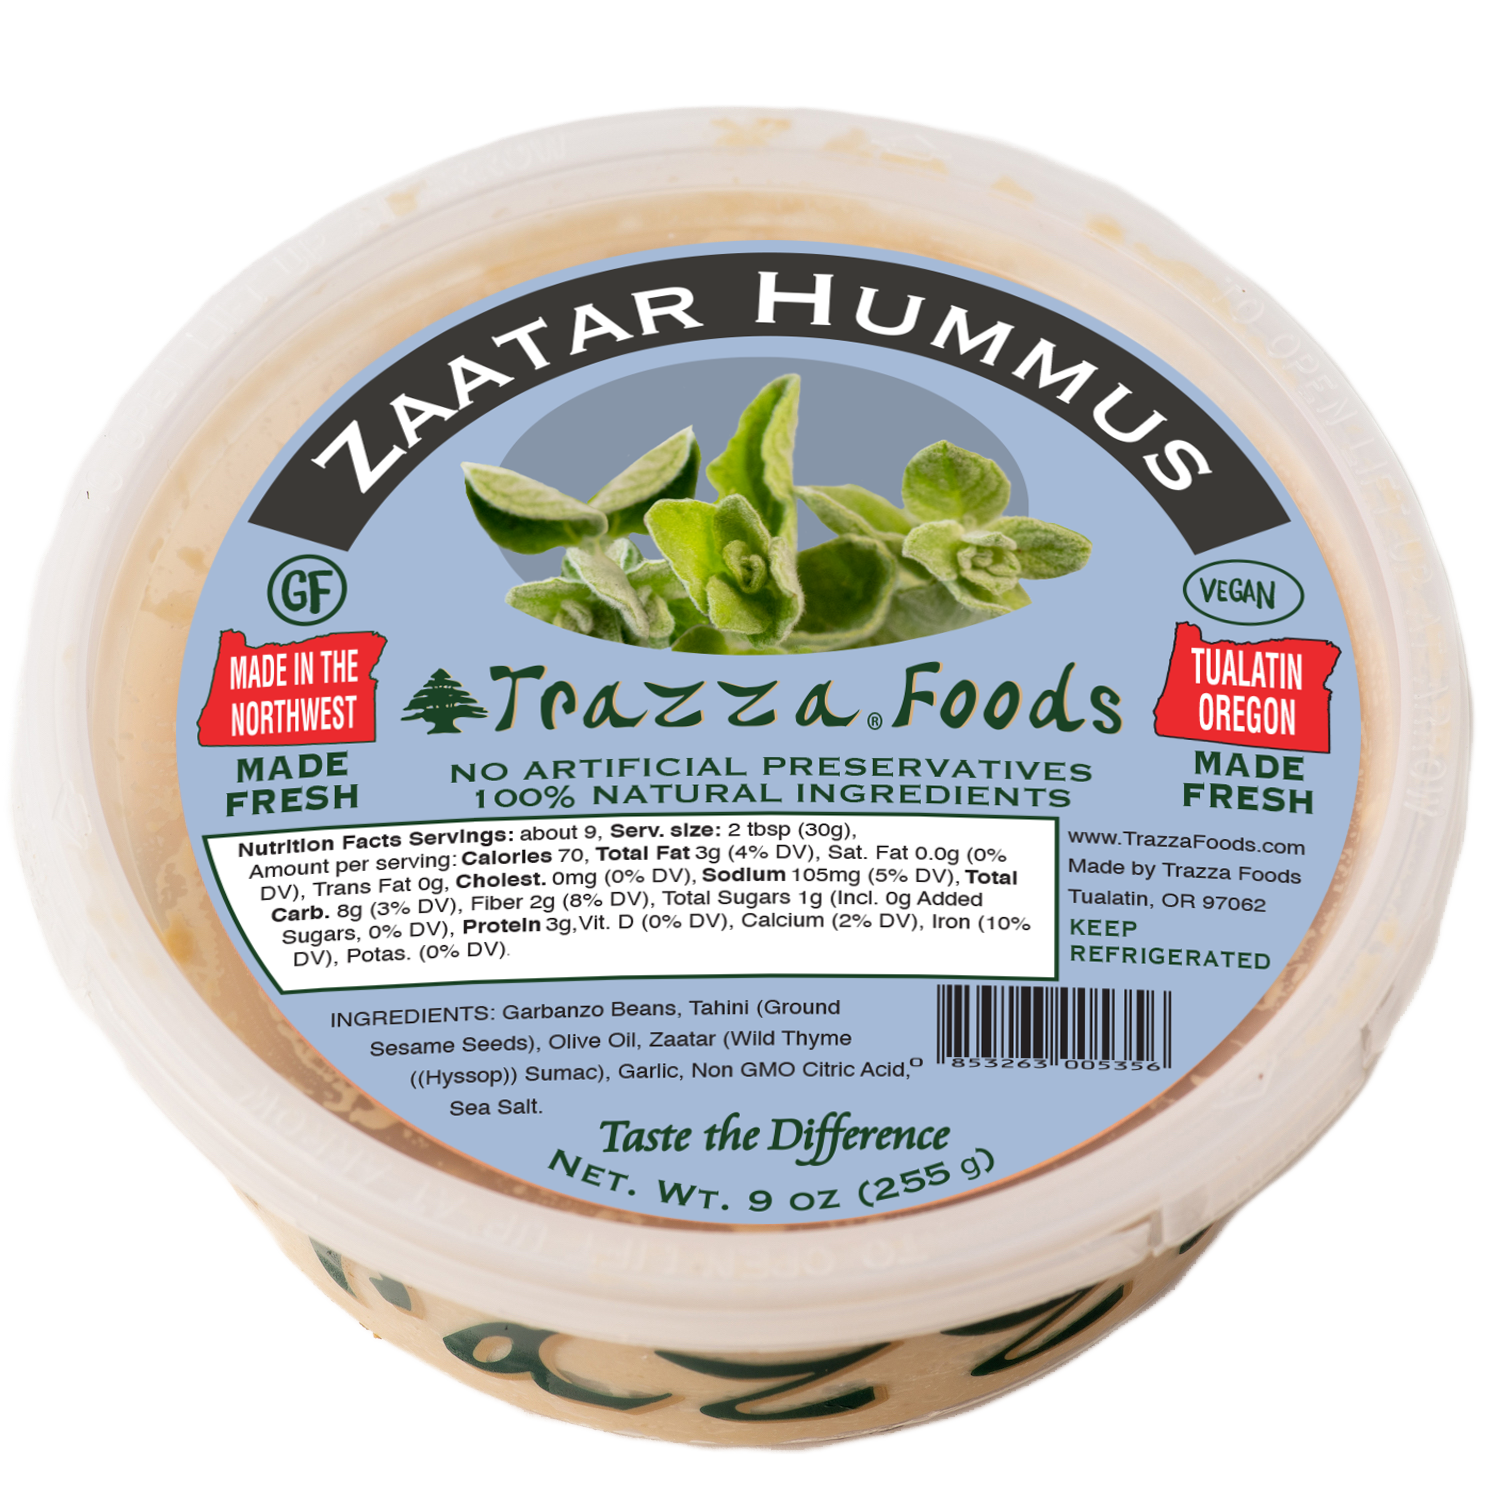 Zaatar Hummus